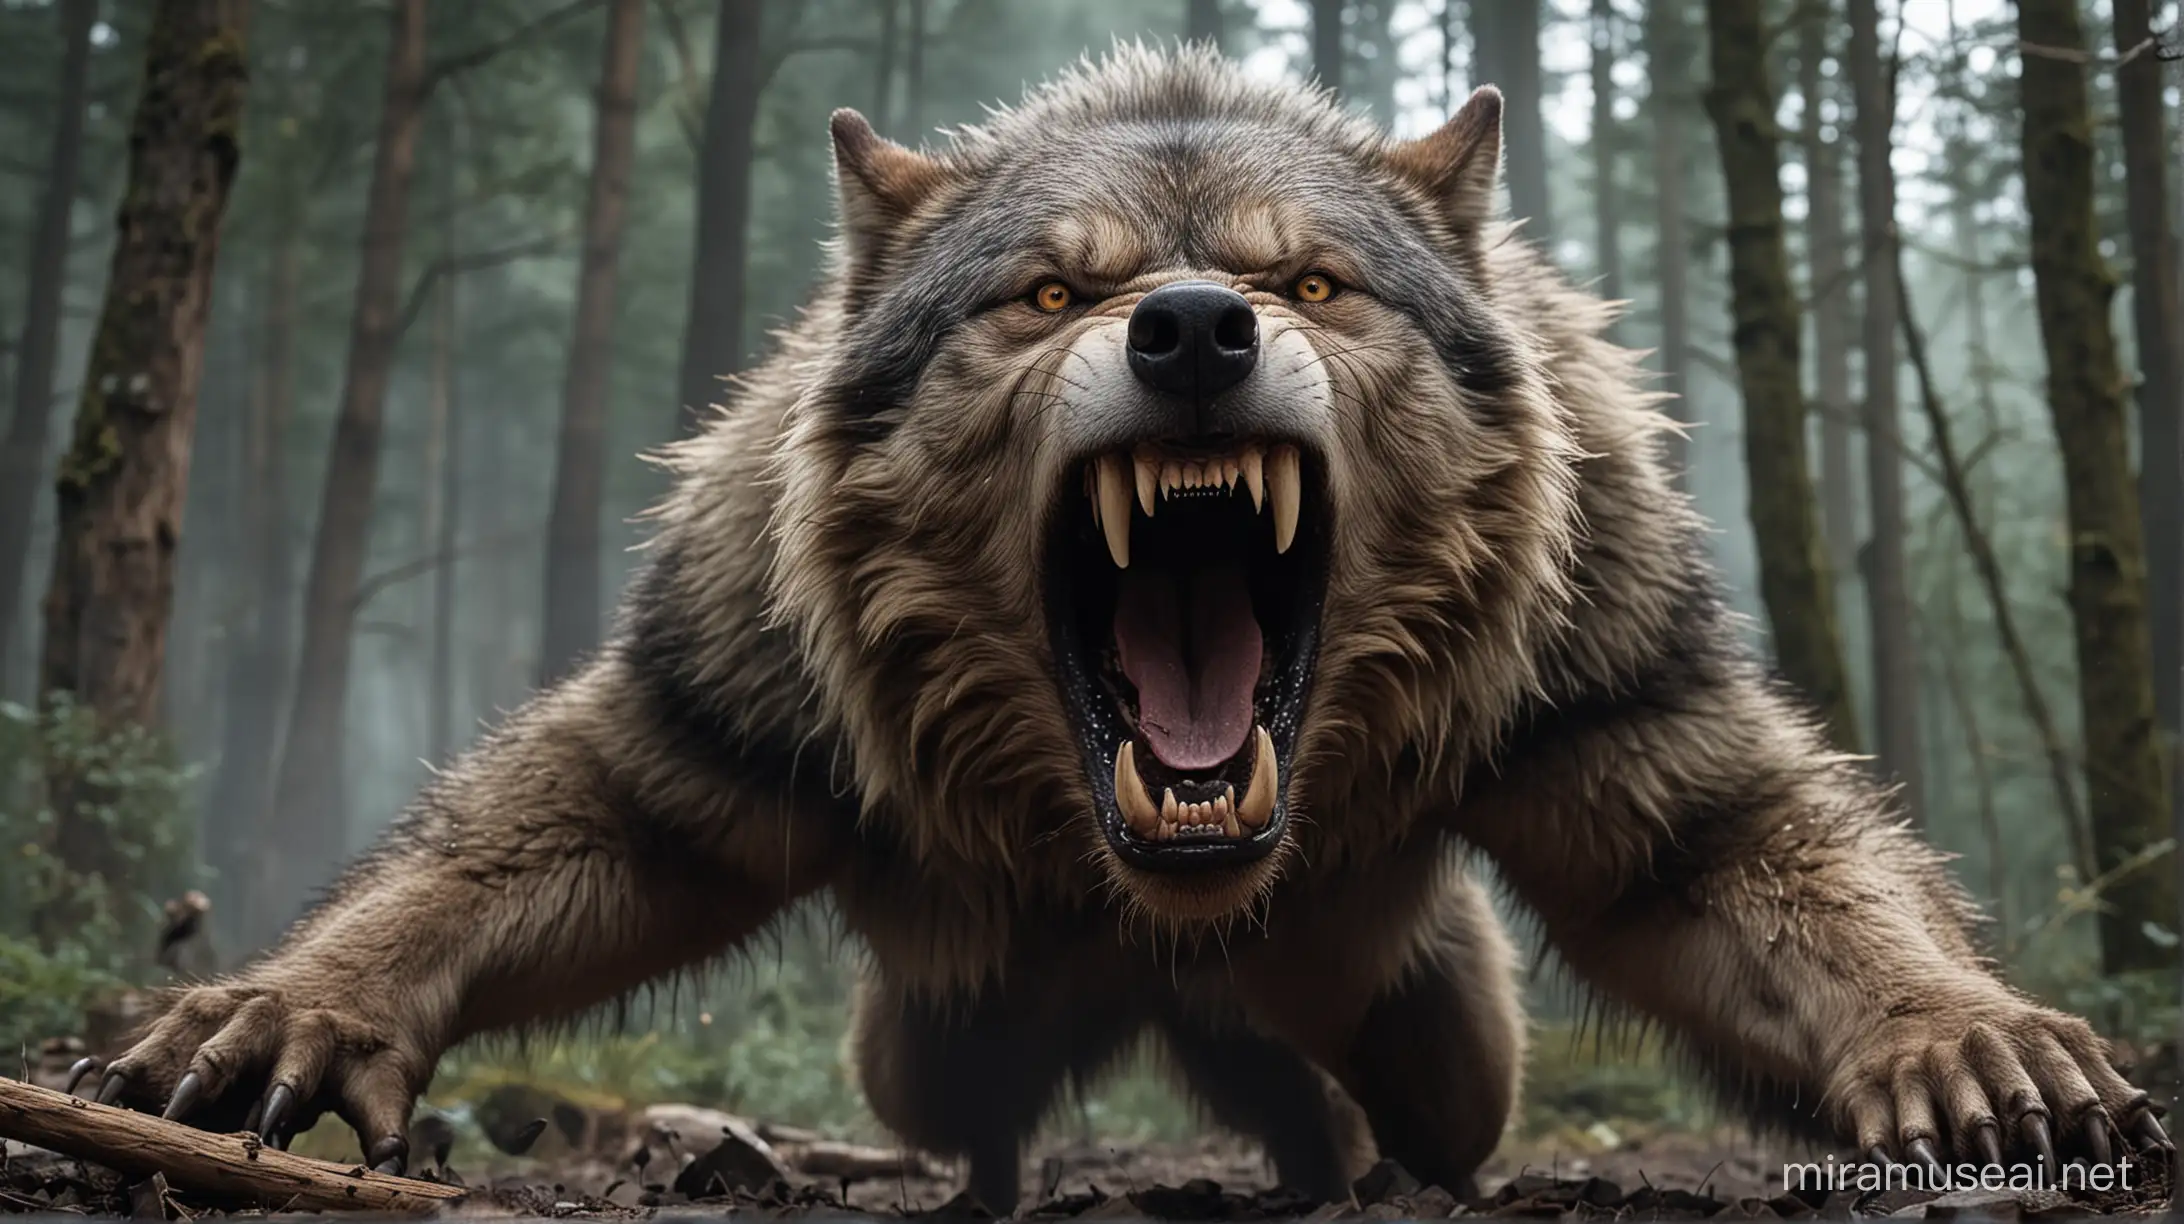 Ferocious Wolf Baring Teeth in Aggressive Attack